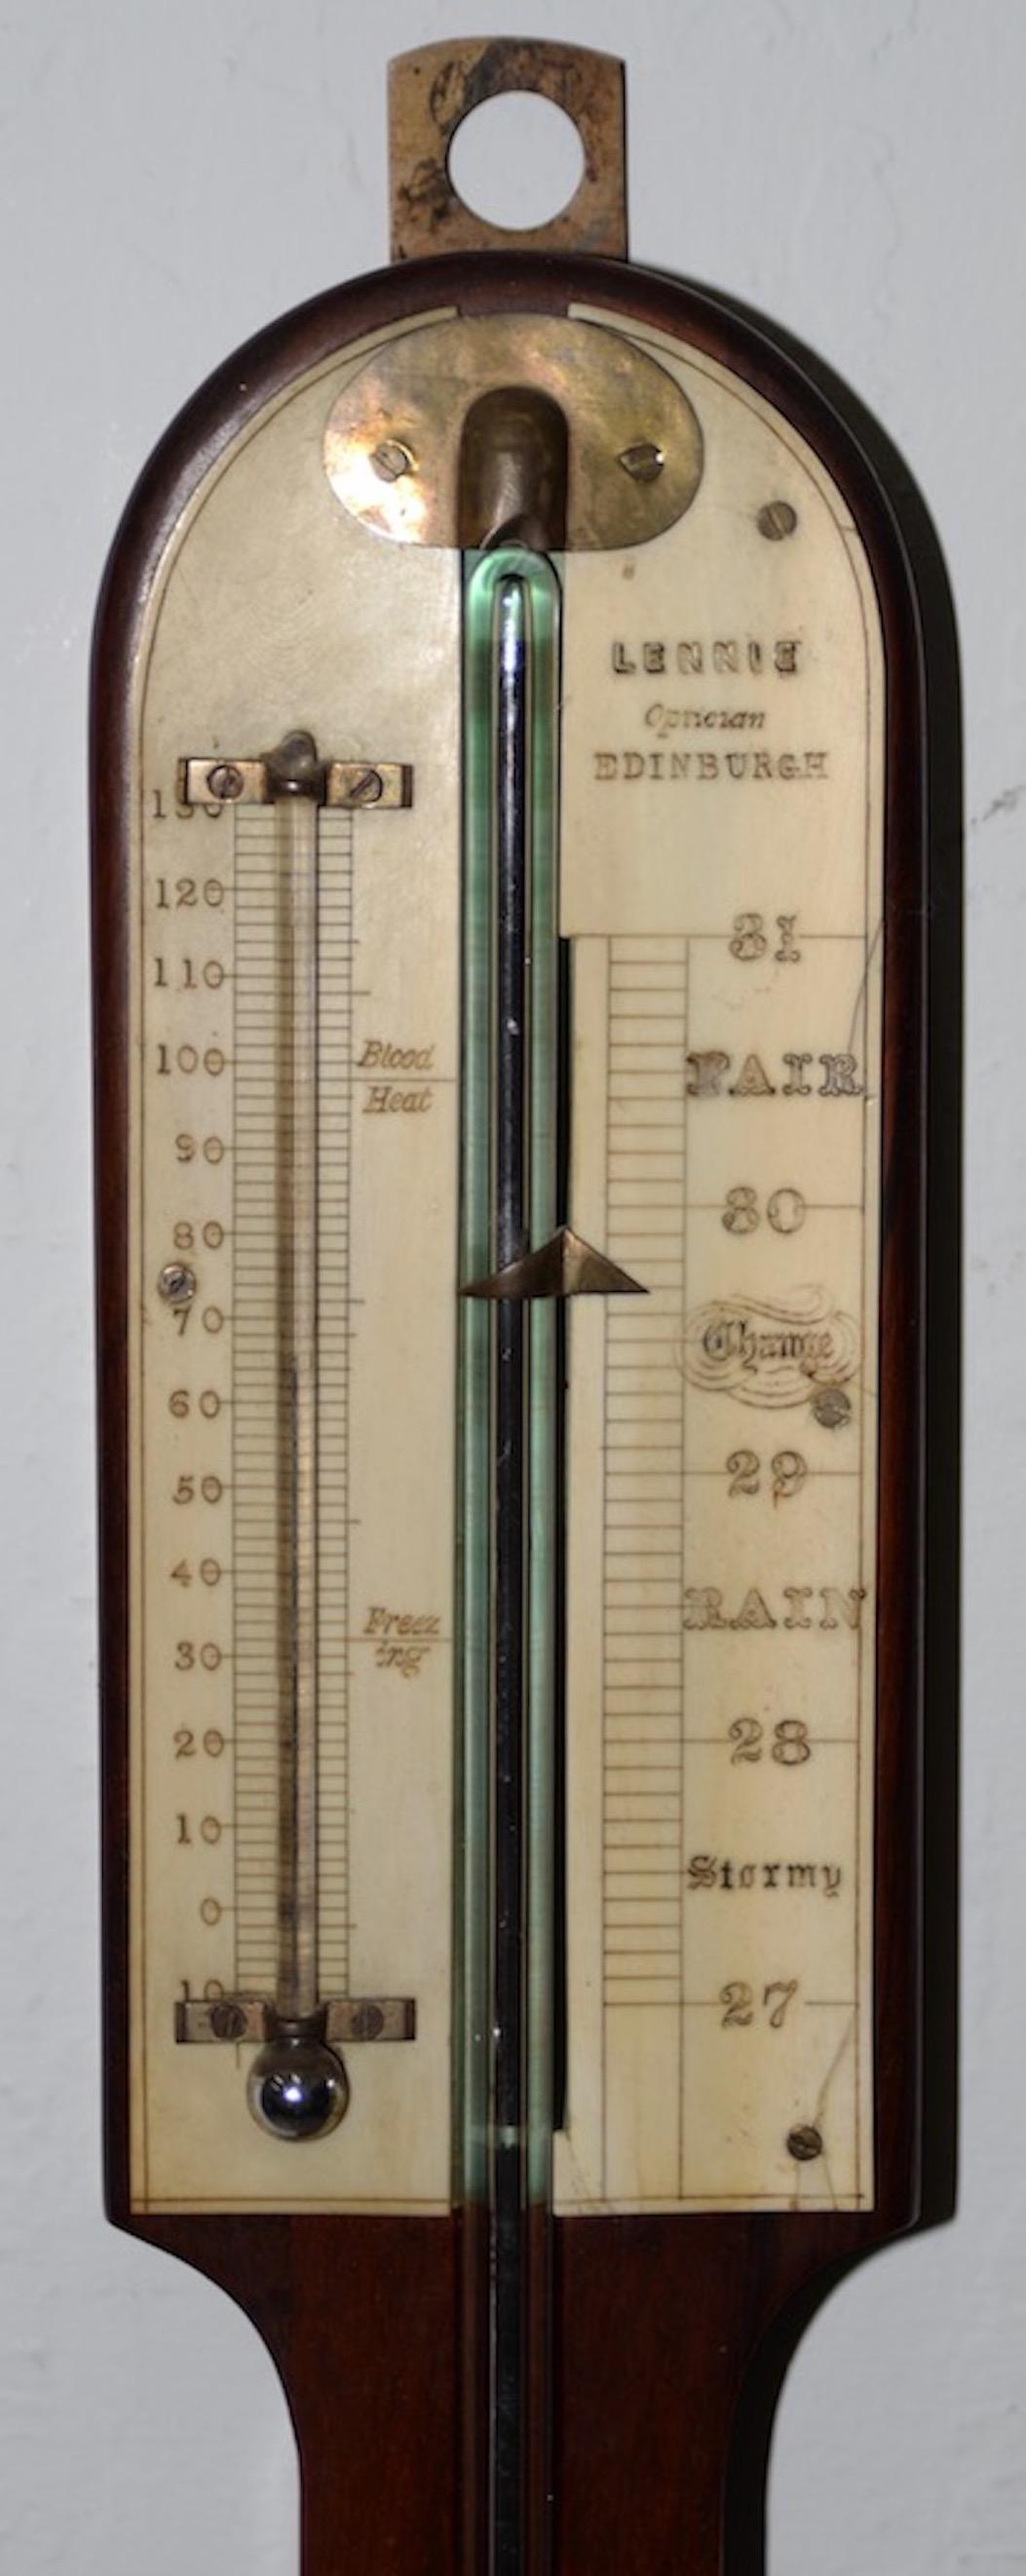 19th century mahogany long case barometer

By Lennie Optician, Edinburgh

Dimensions 37